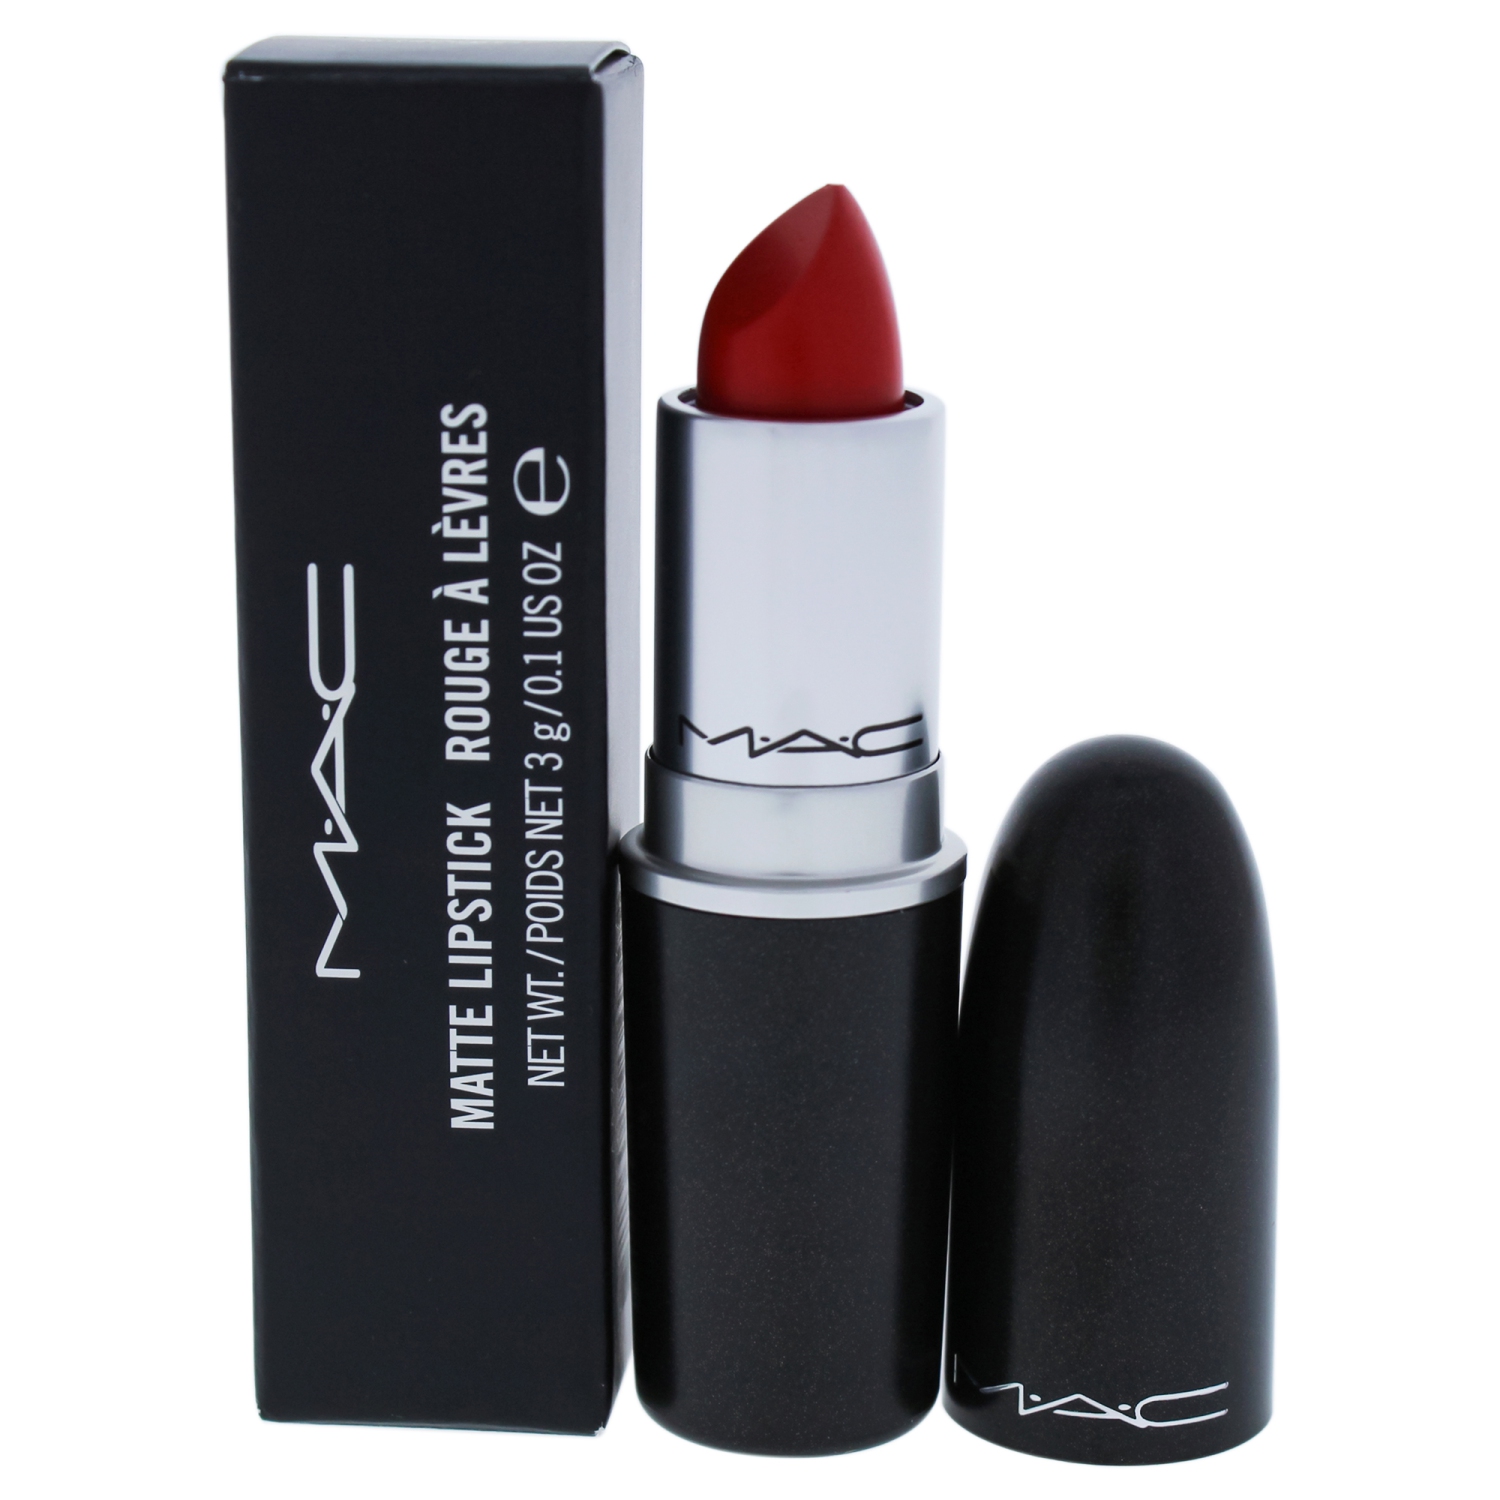 Matte Lipstick - Mangrove by MAC for Women - 0.1 oz Lipstick